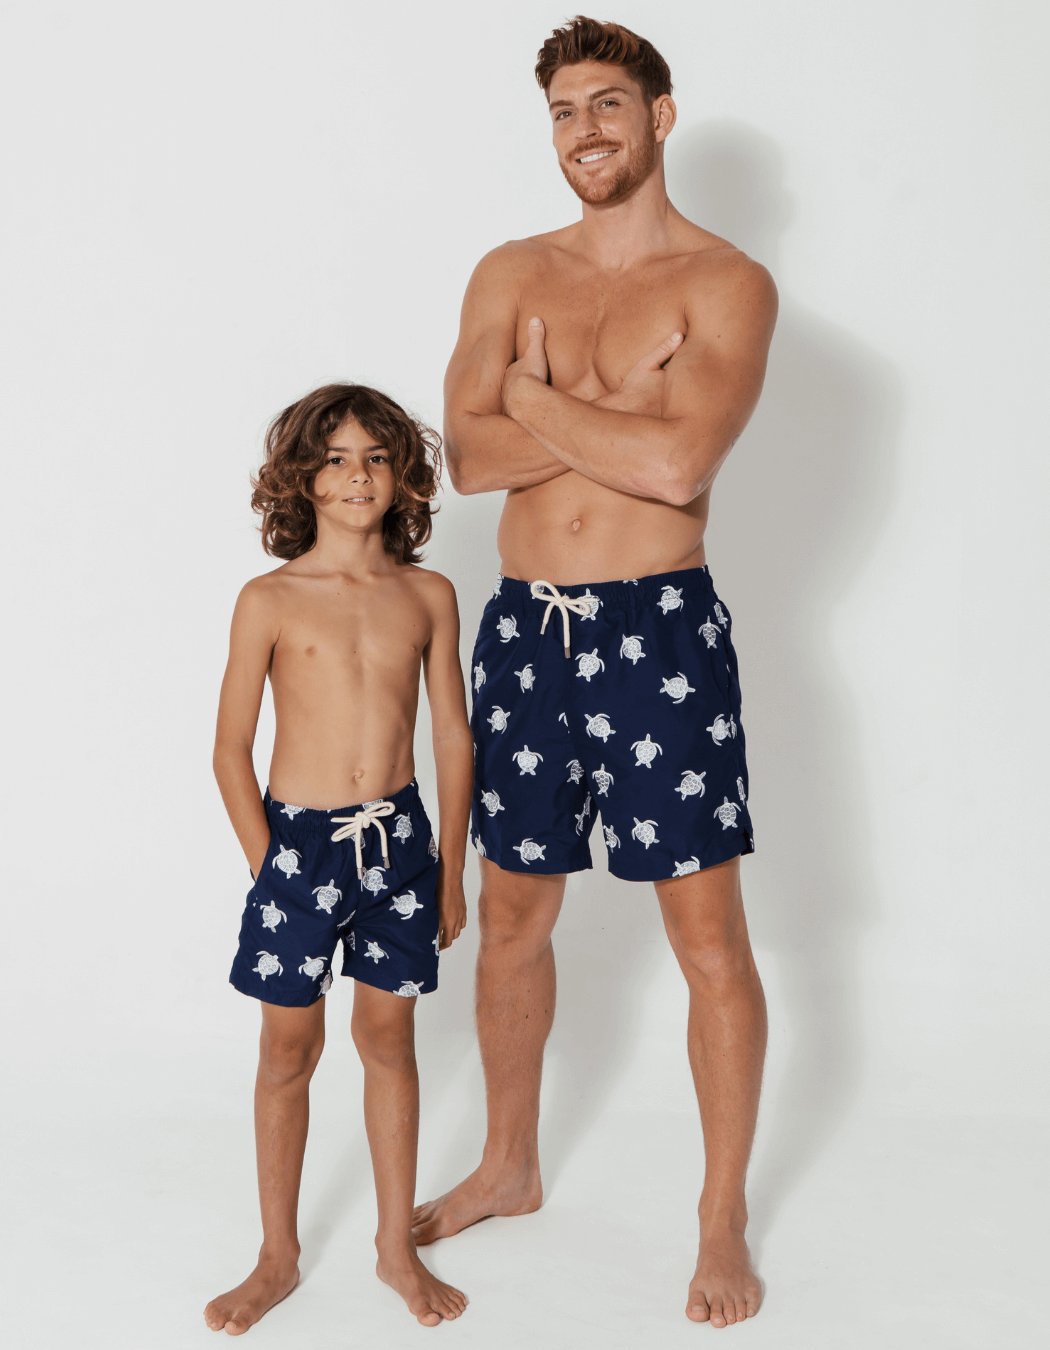 Sandbar_father_and_son_swim_shorts_embroidered_turtle